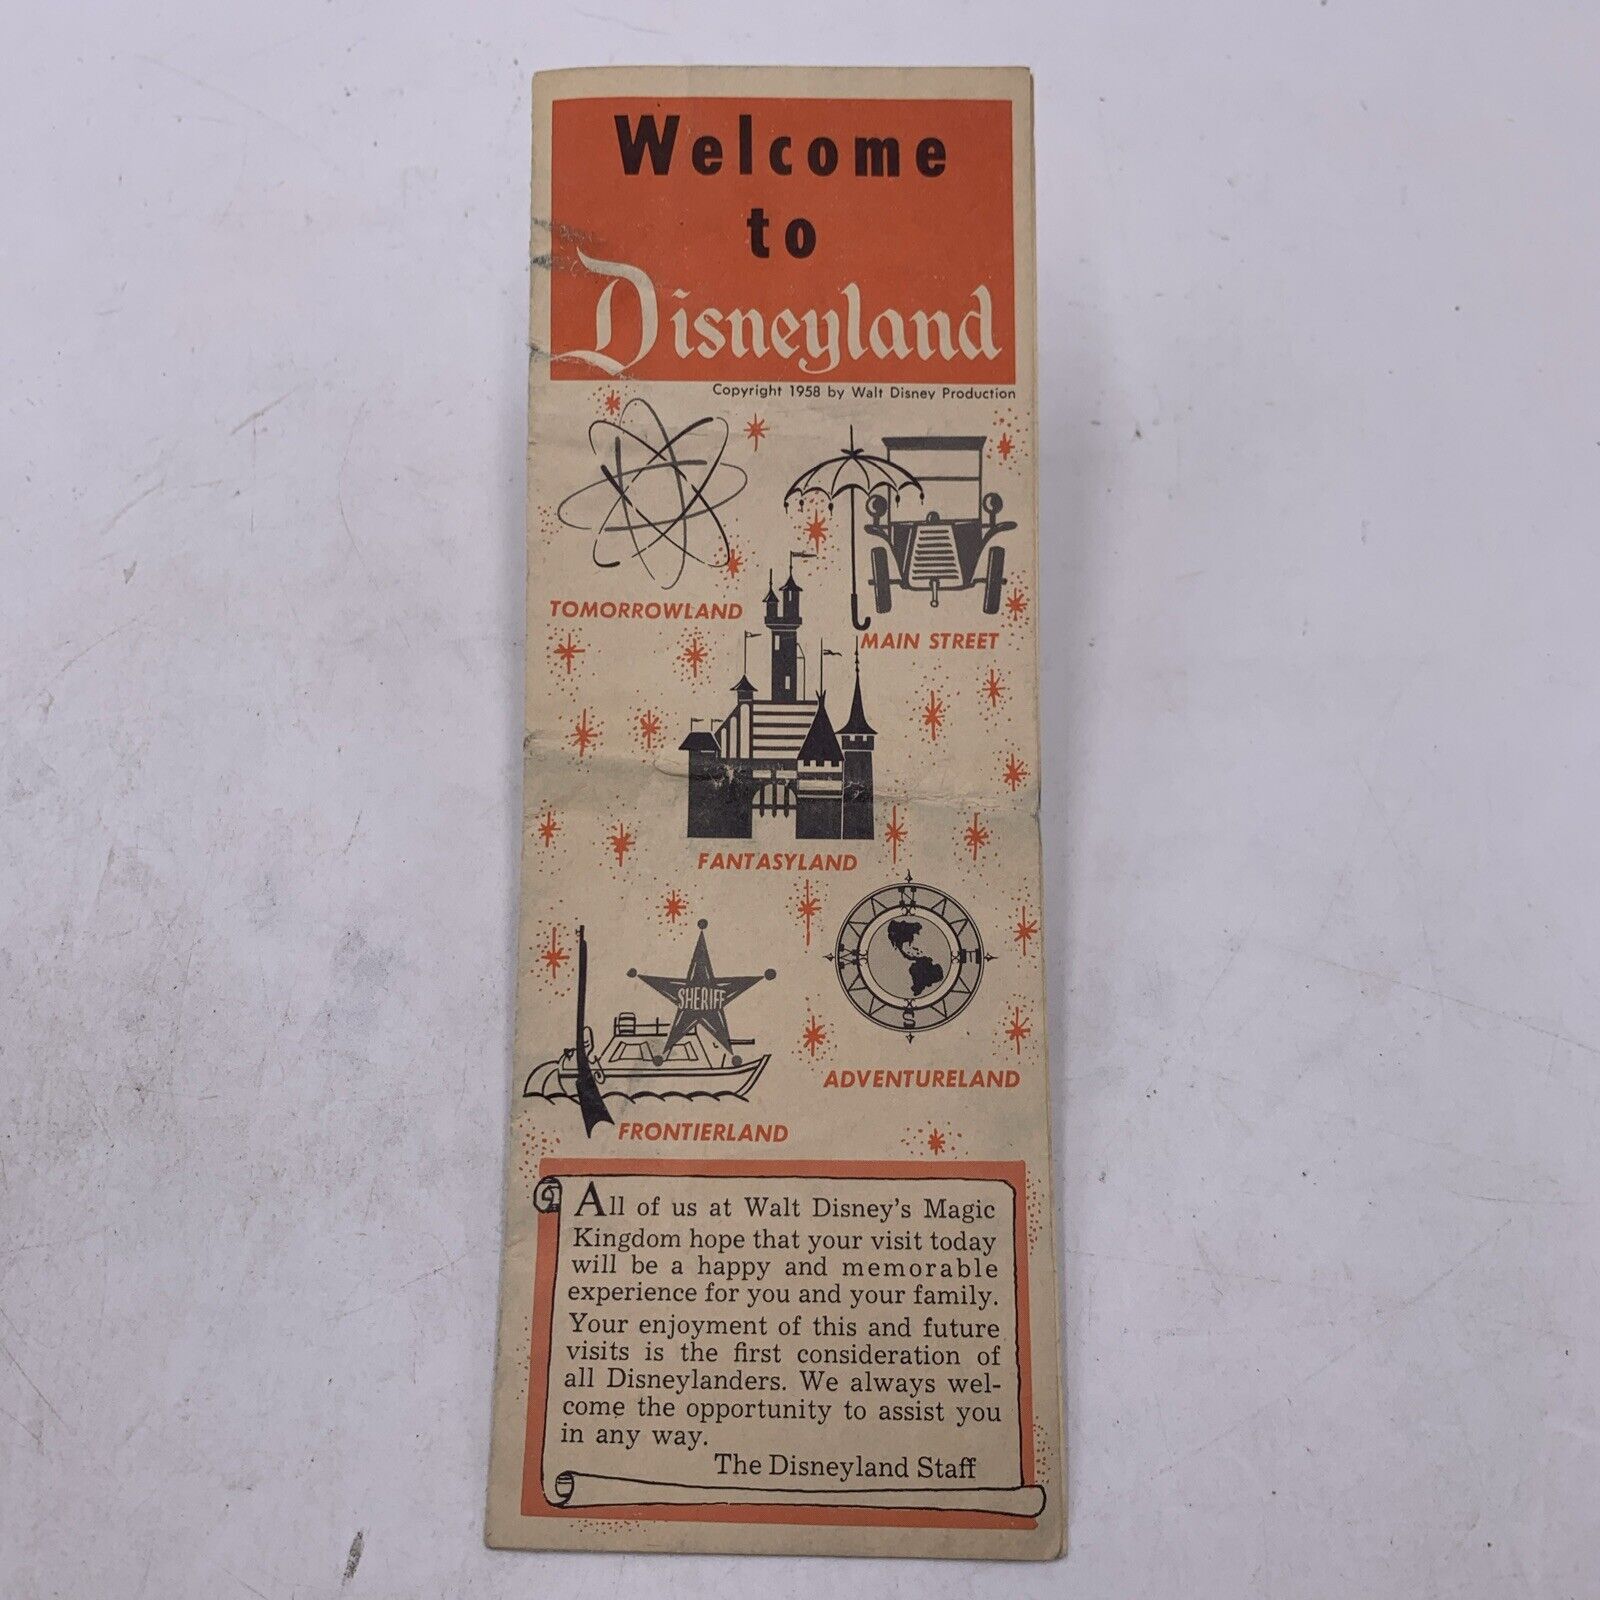 Vintage 1958 Welcome to Disneyland Brochure Map Guide Pamphlet Souvenir Original